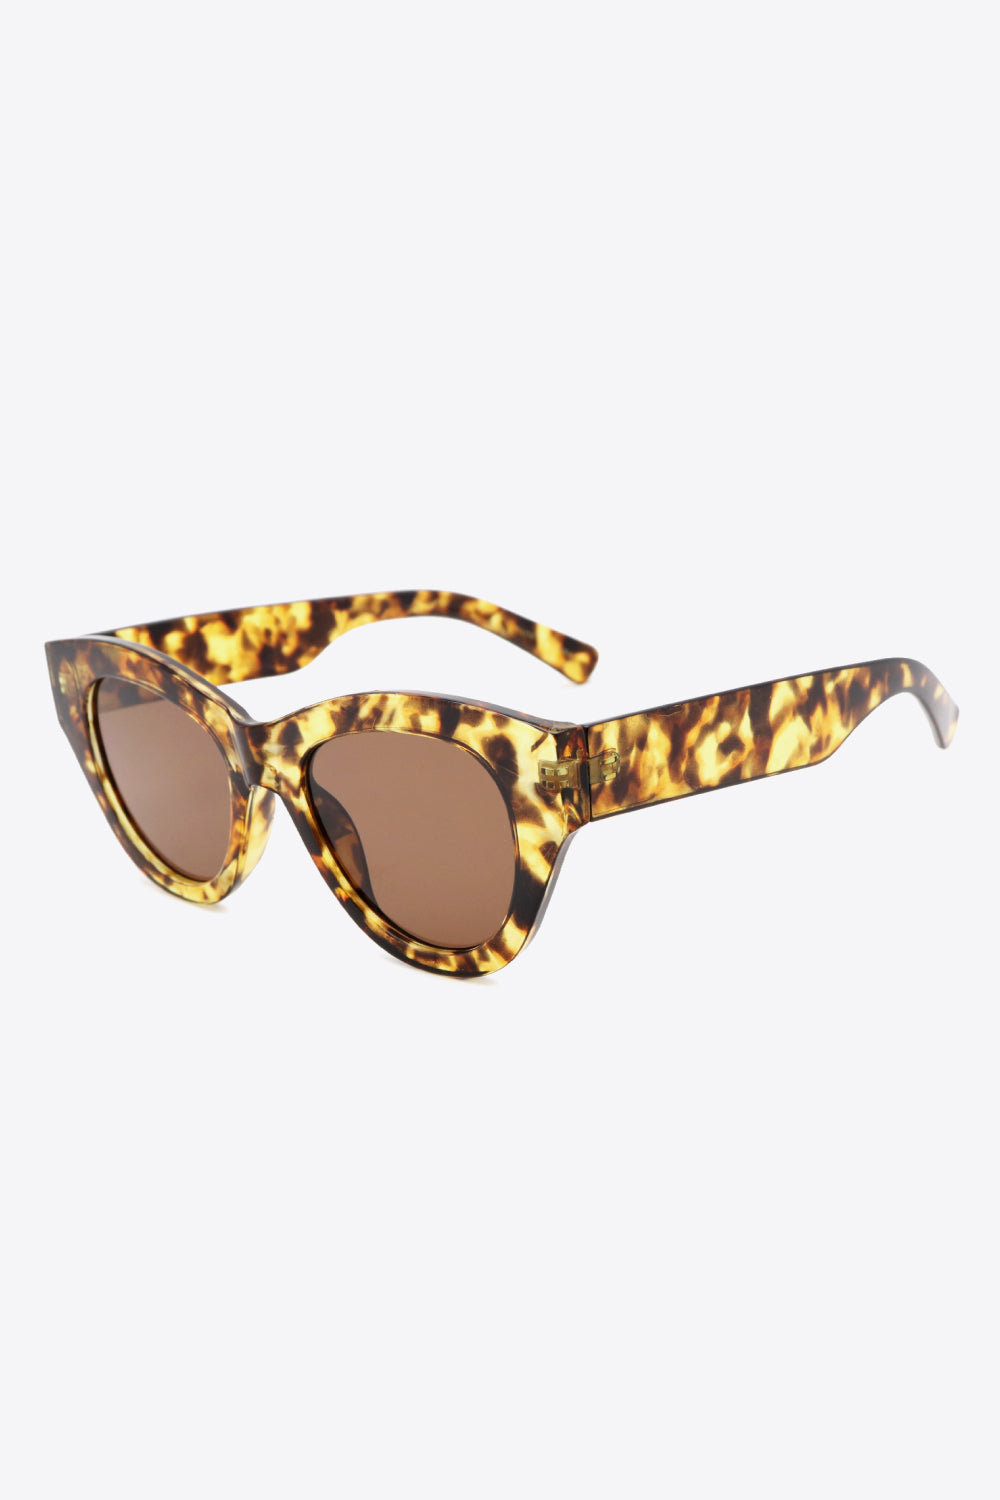 Tortoiseshell Polycarbonate Wayfarer Sunglasses Print on any thing USA/STOD clothes